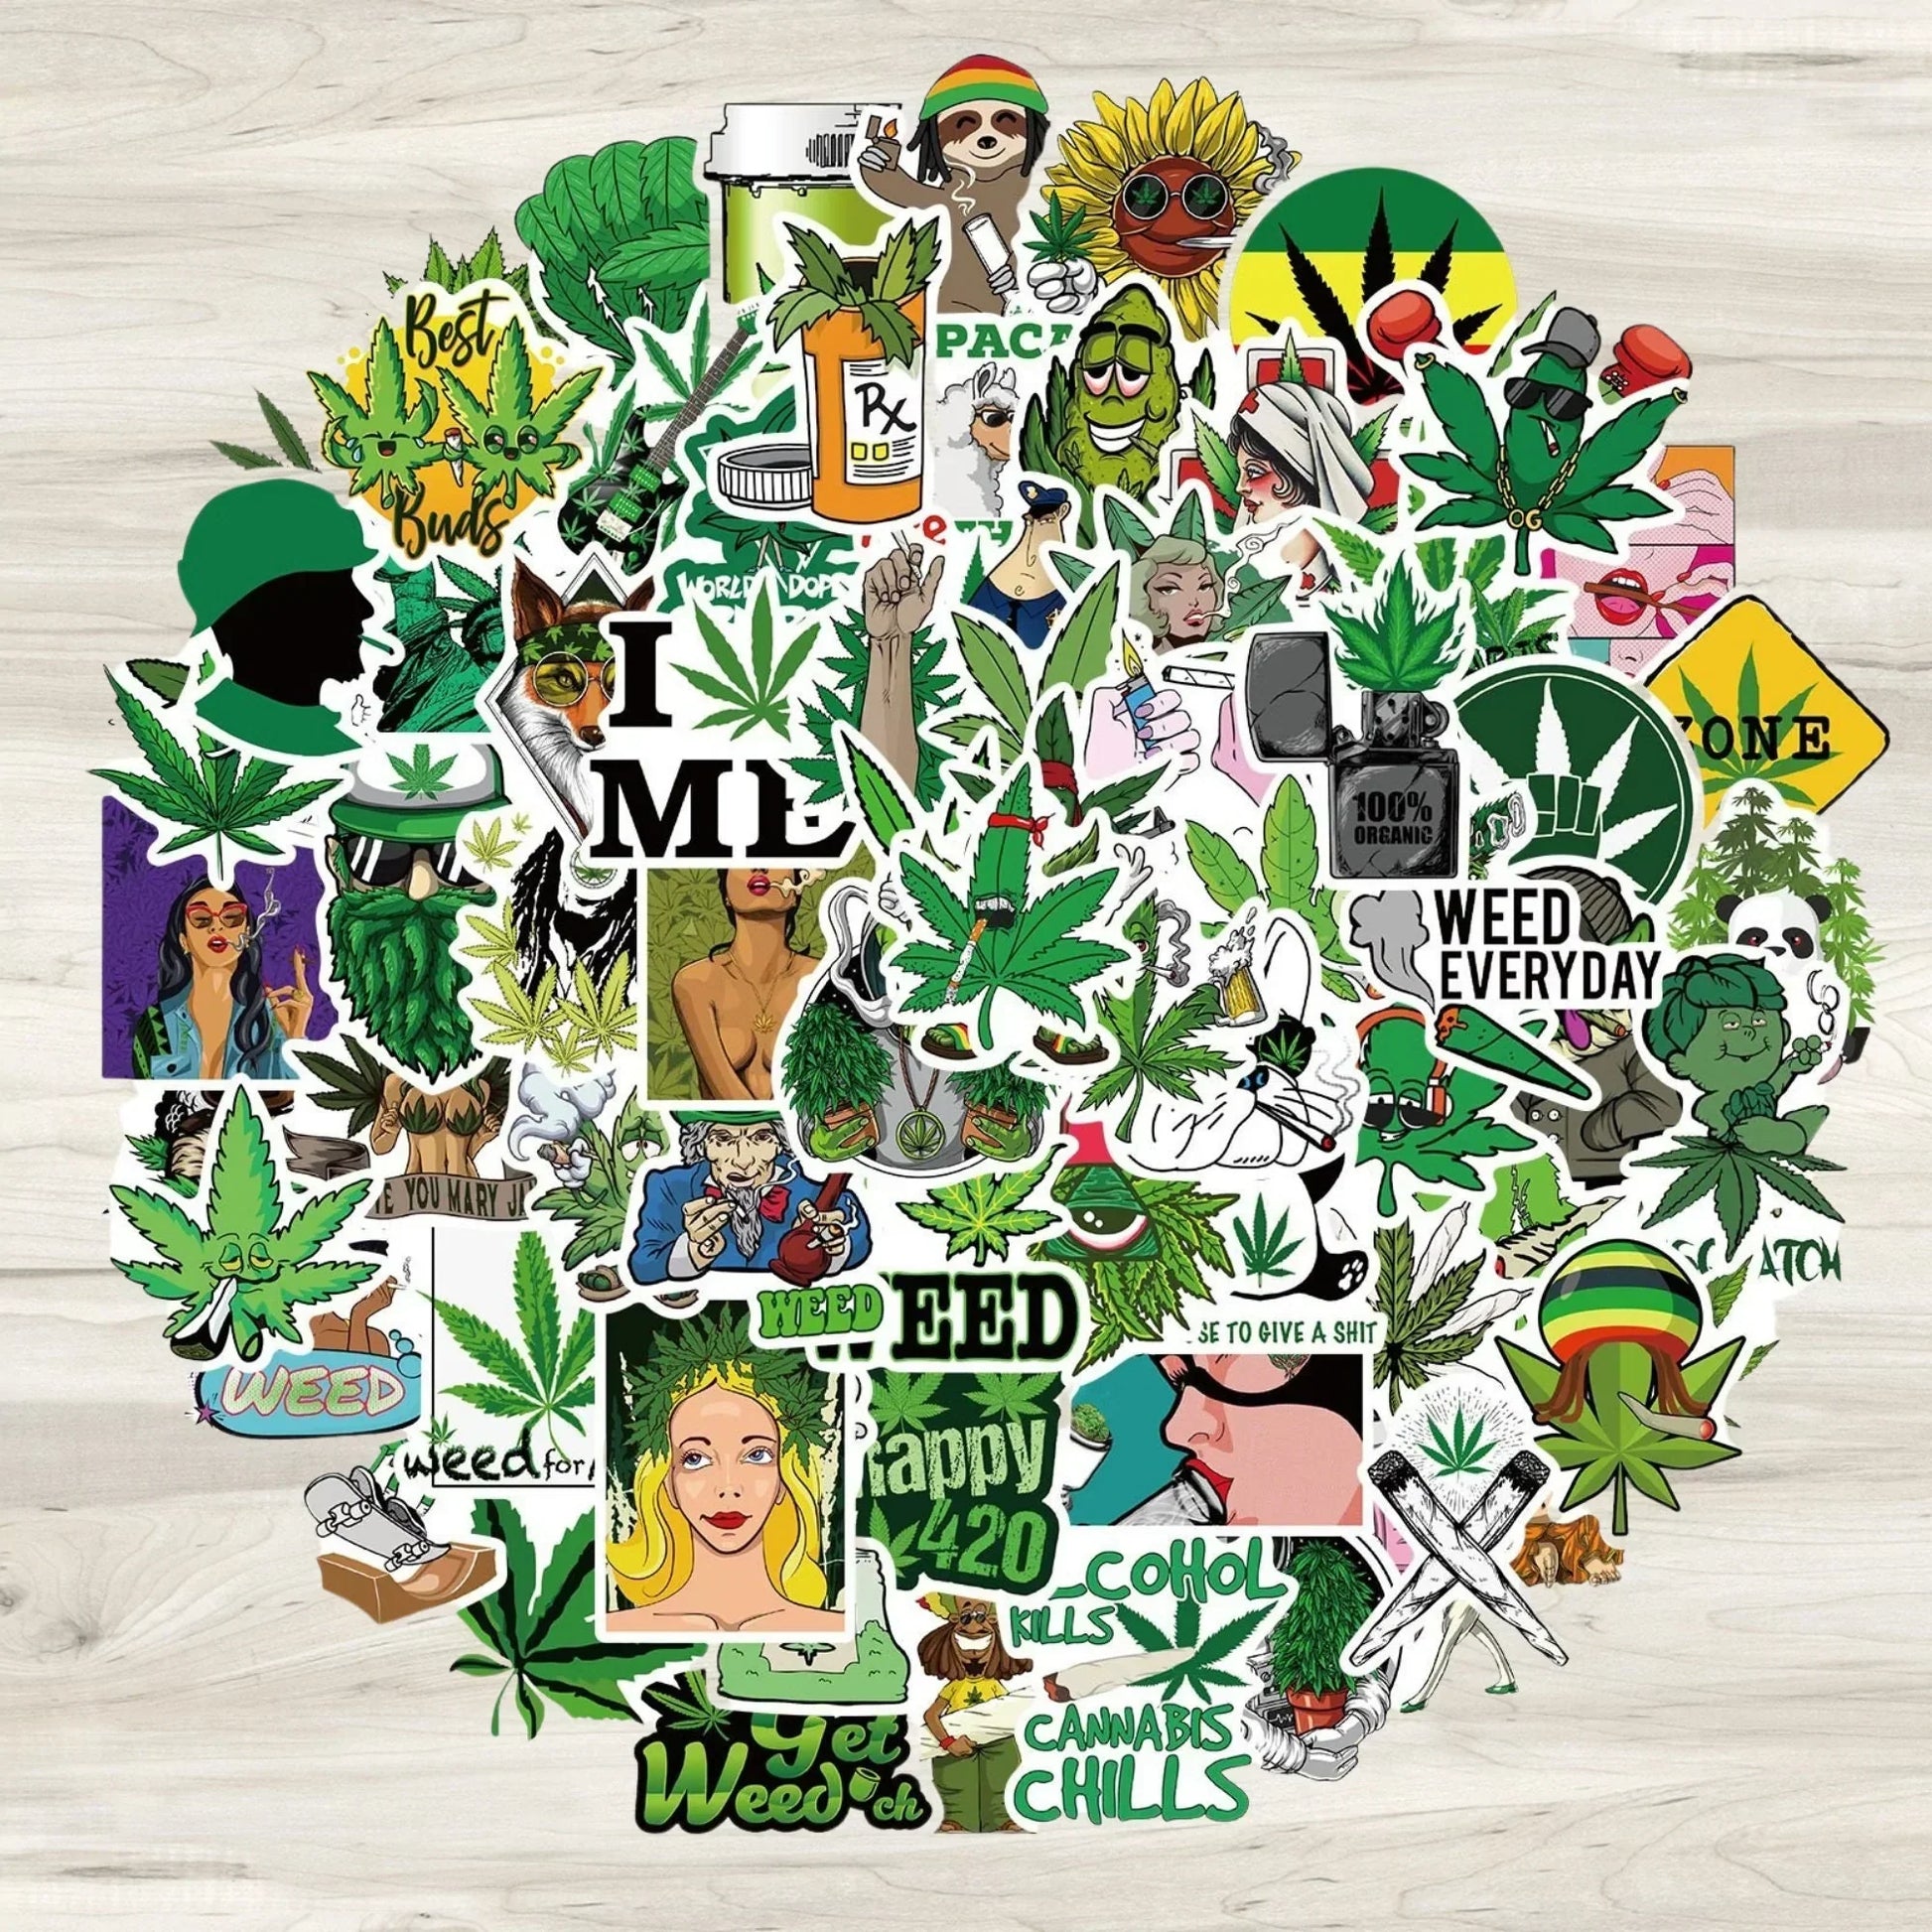 50 Stoner Stickers, Weed Stickers, Weed Art, Stoner Decor, Stashjar, Grinder, Rolling Tray, Stashbox, Laptop Stickers, Stoner Accessories